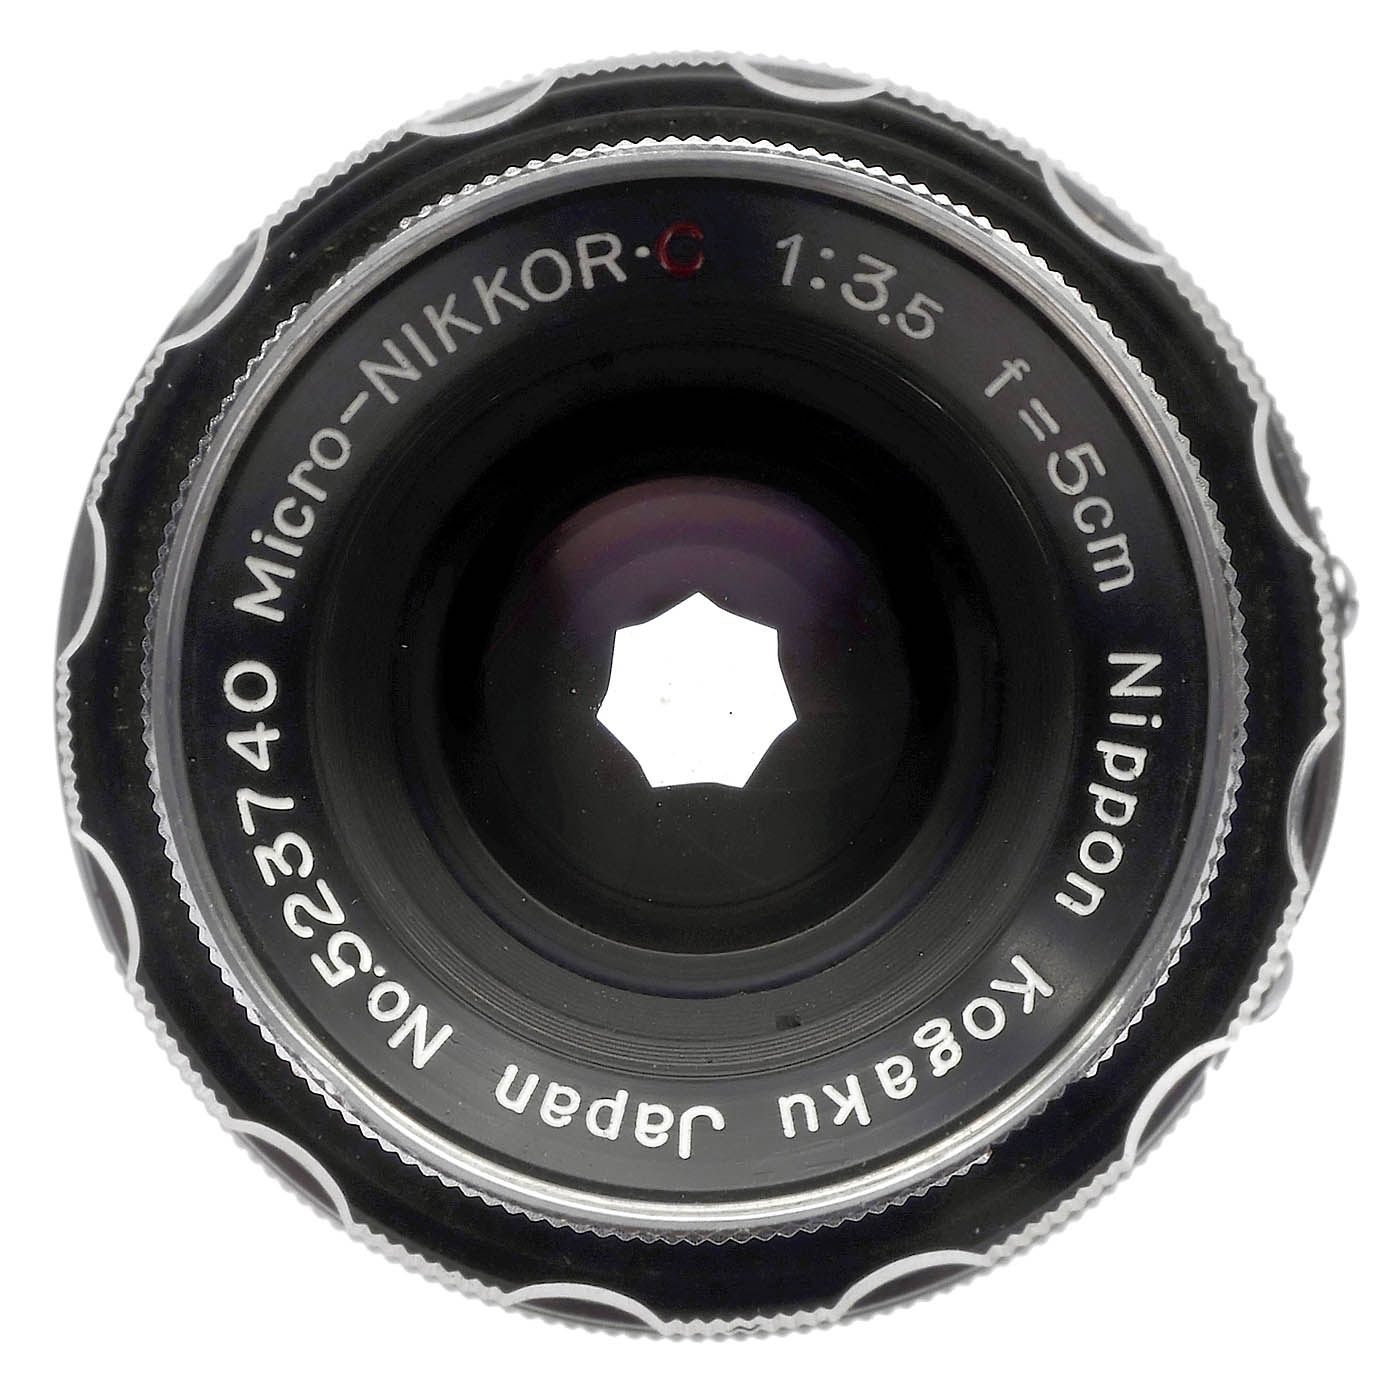 Micro-Nikkor.C 3.5/5 cm Lens, c. 1956 - Image 2 of 3